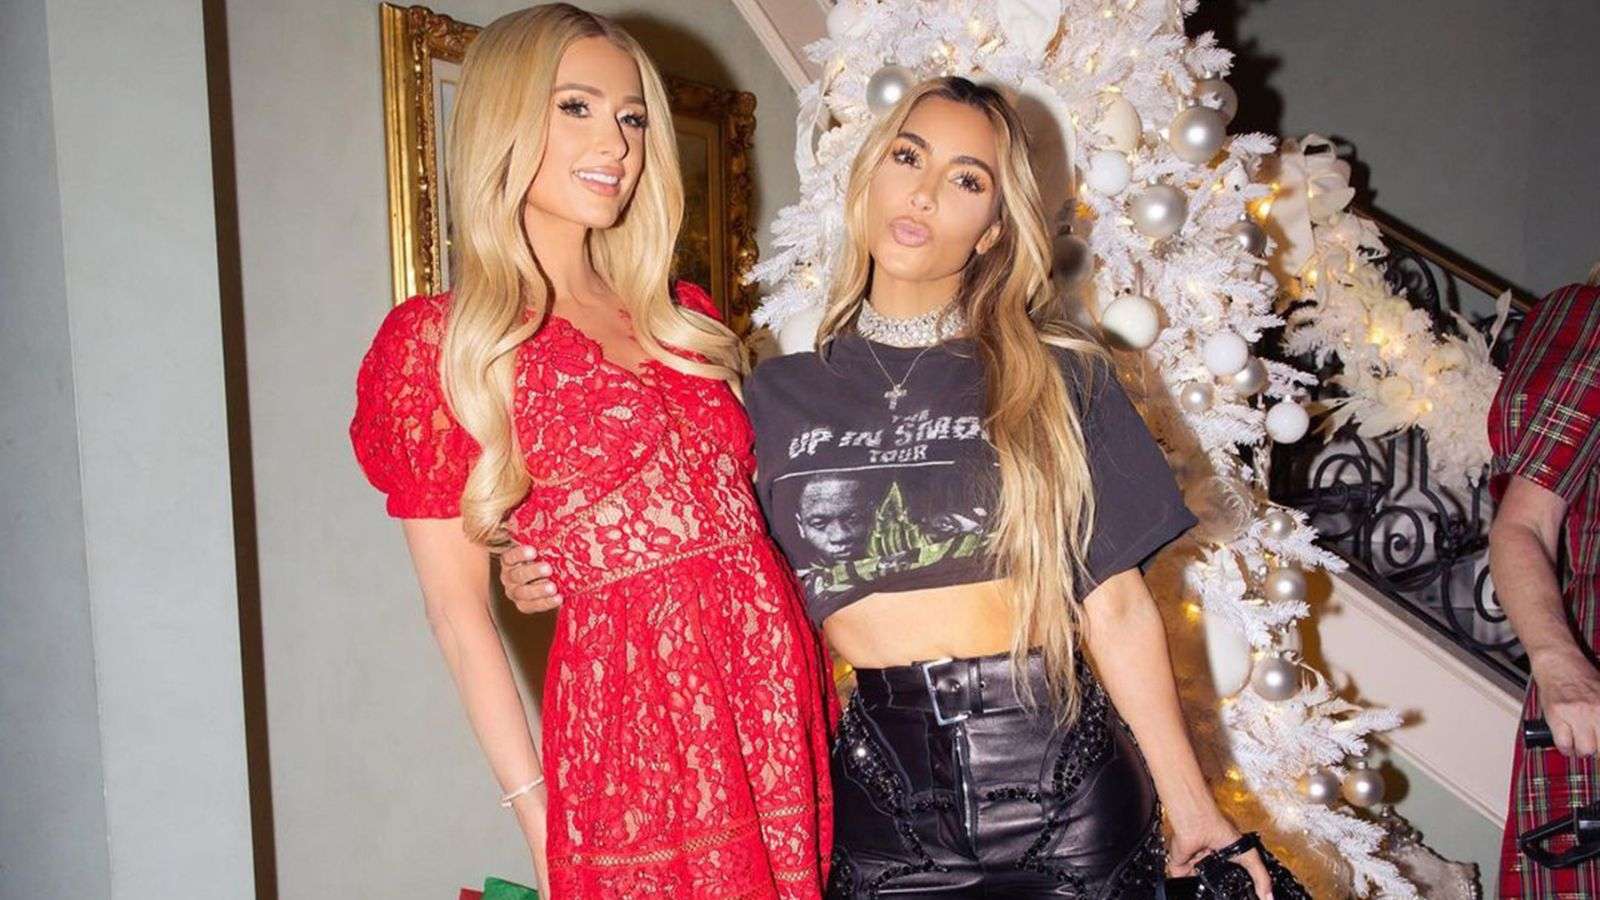 Fans blast Kim Kardashian for outfit at Paris Hilton's Christmas party